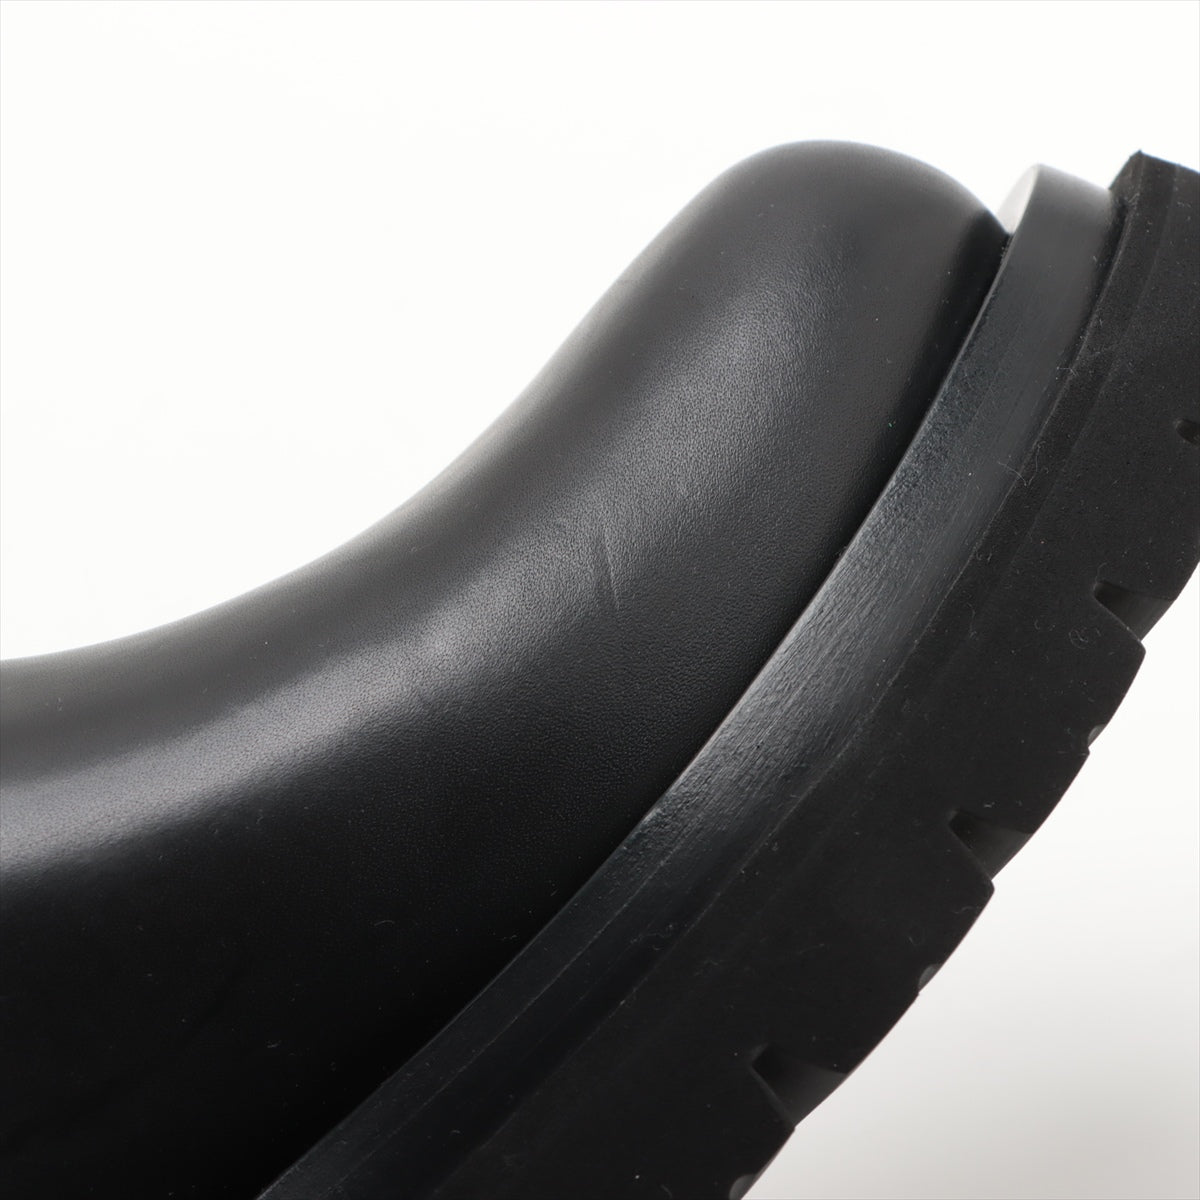 Bottega Veneta Rug Leather X Fabric Side Goar Shoes 37.5  Black Chelsea Boots